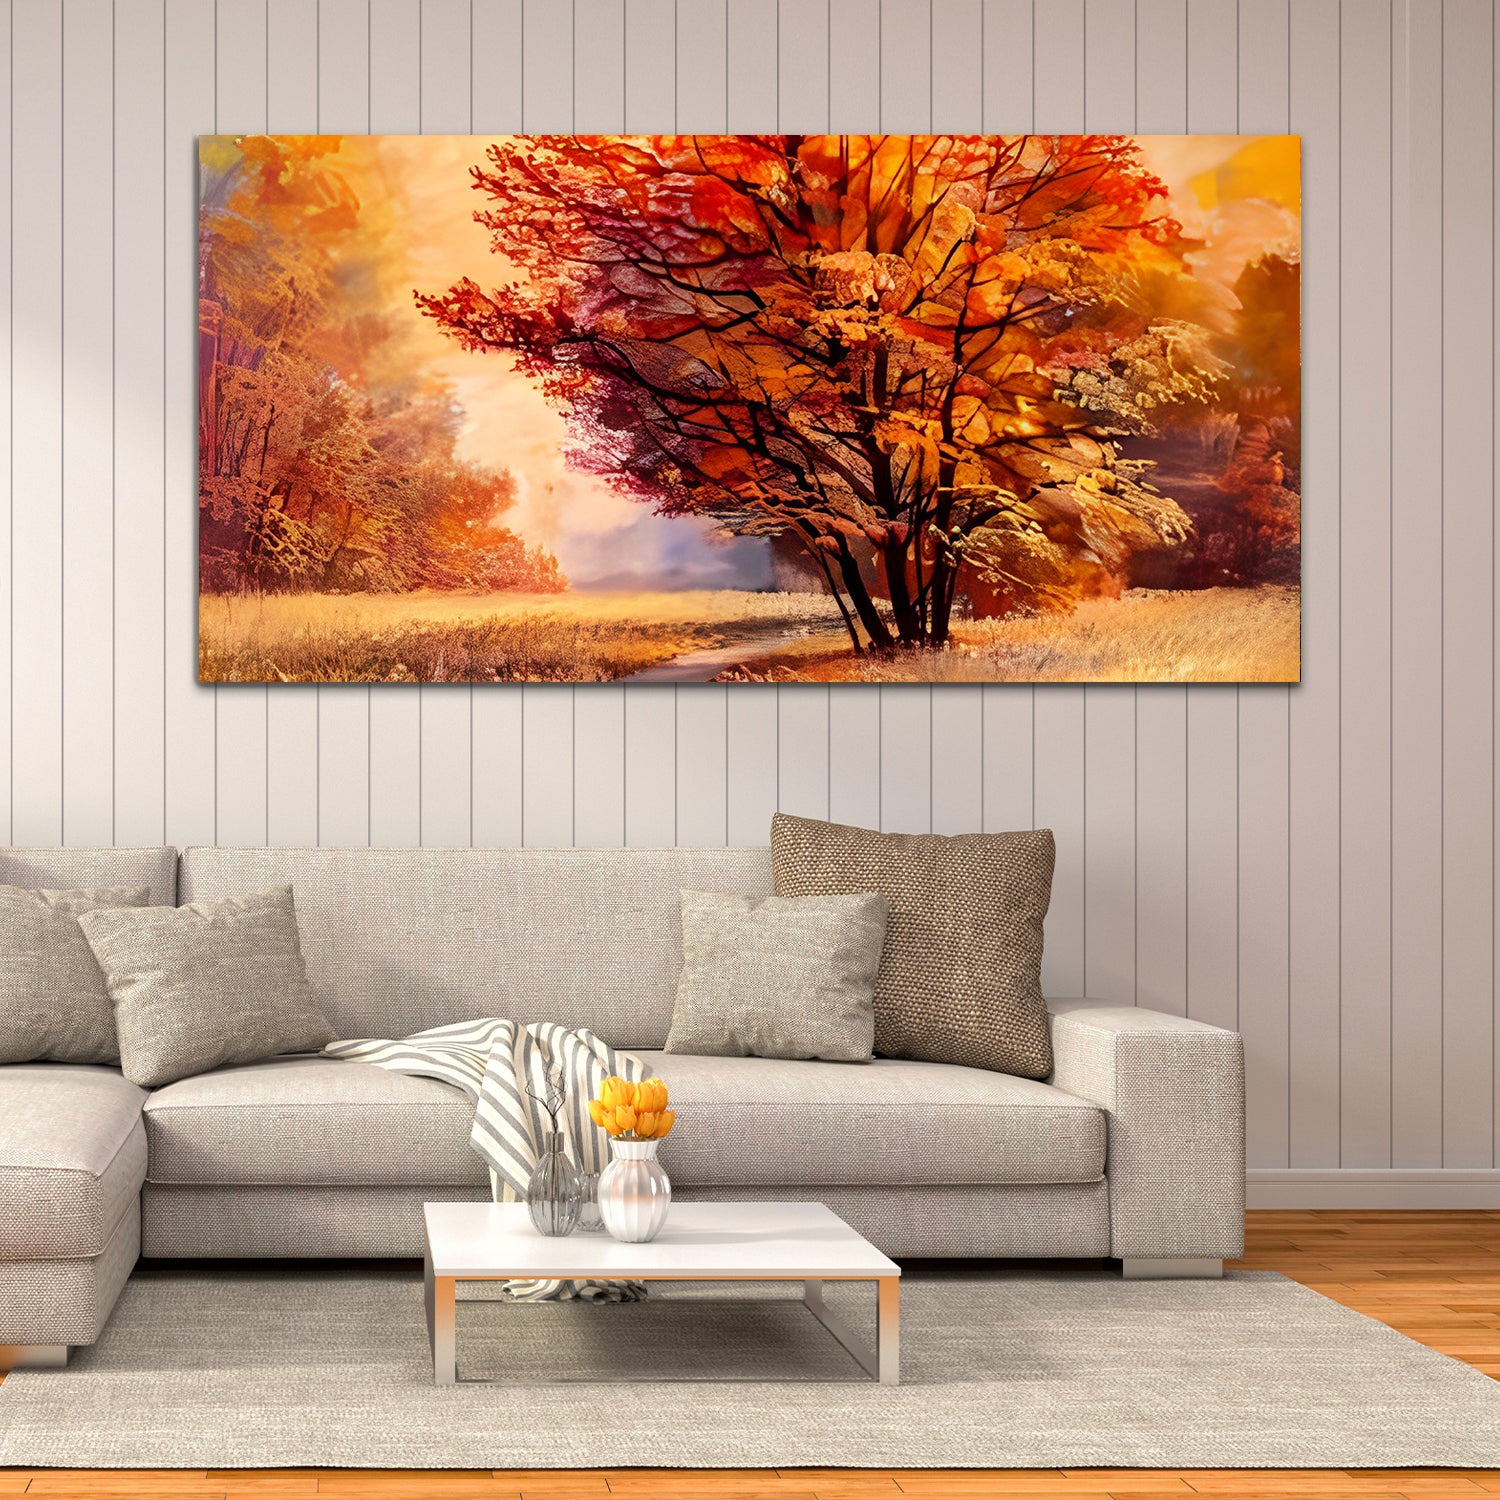 BeautiFull Tree Orange-Off White Canvas art Wall Painting